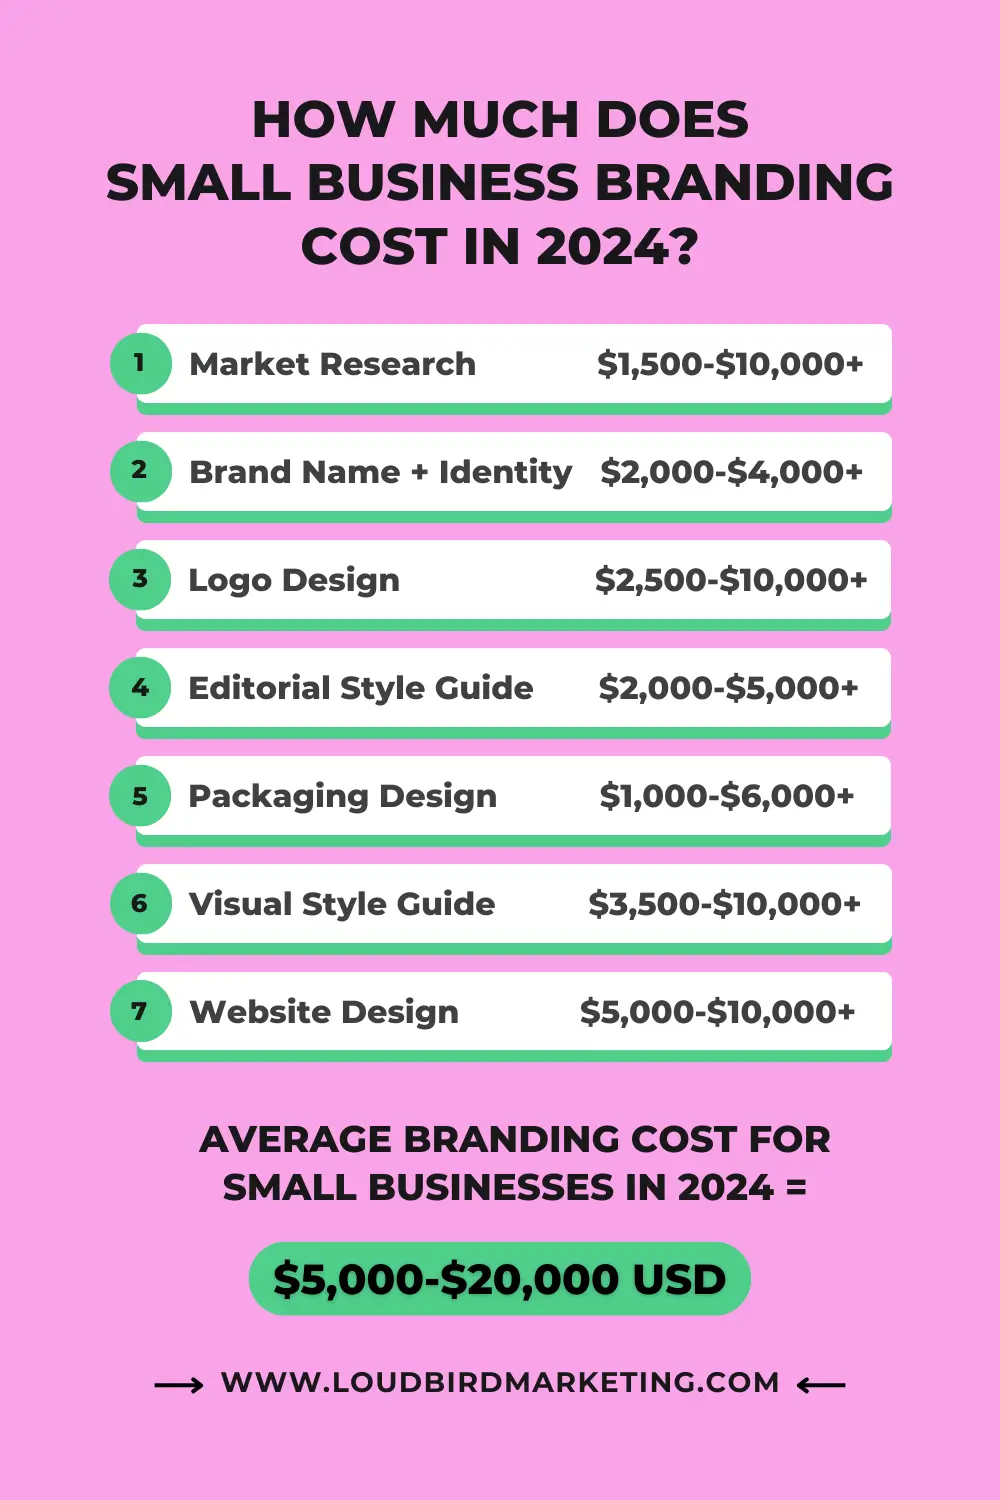 Small Business Branding Cost 2024 Infographic LoudBirdMarketing.com